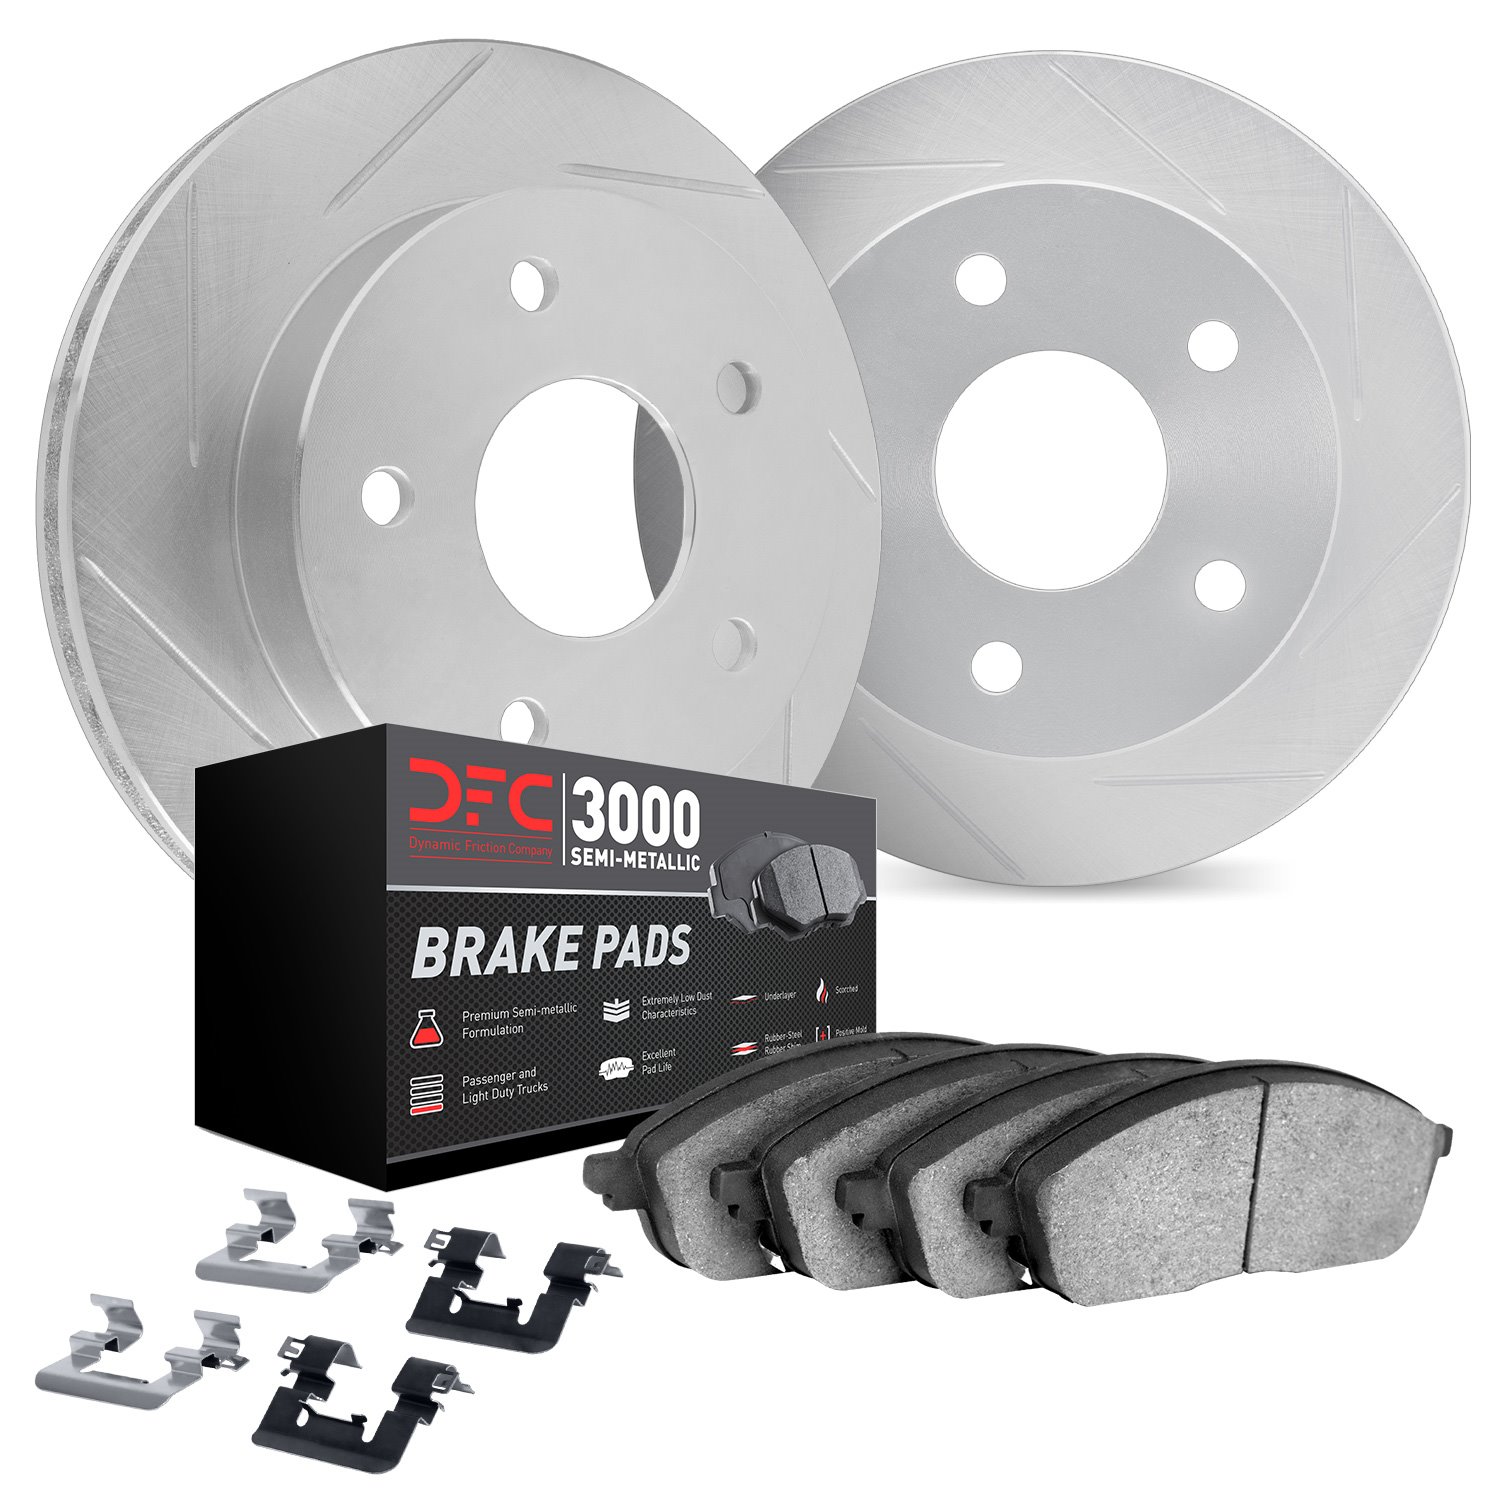 5112-67101 Slotted Brake Rotors with 3000-Series Semi-Metallic Brake Pads Kit & Hardware [Silver], Fits Select Multiple Makes/Mo